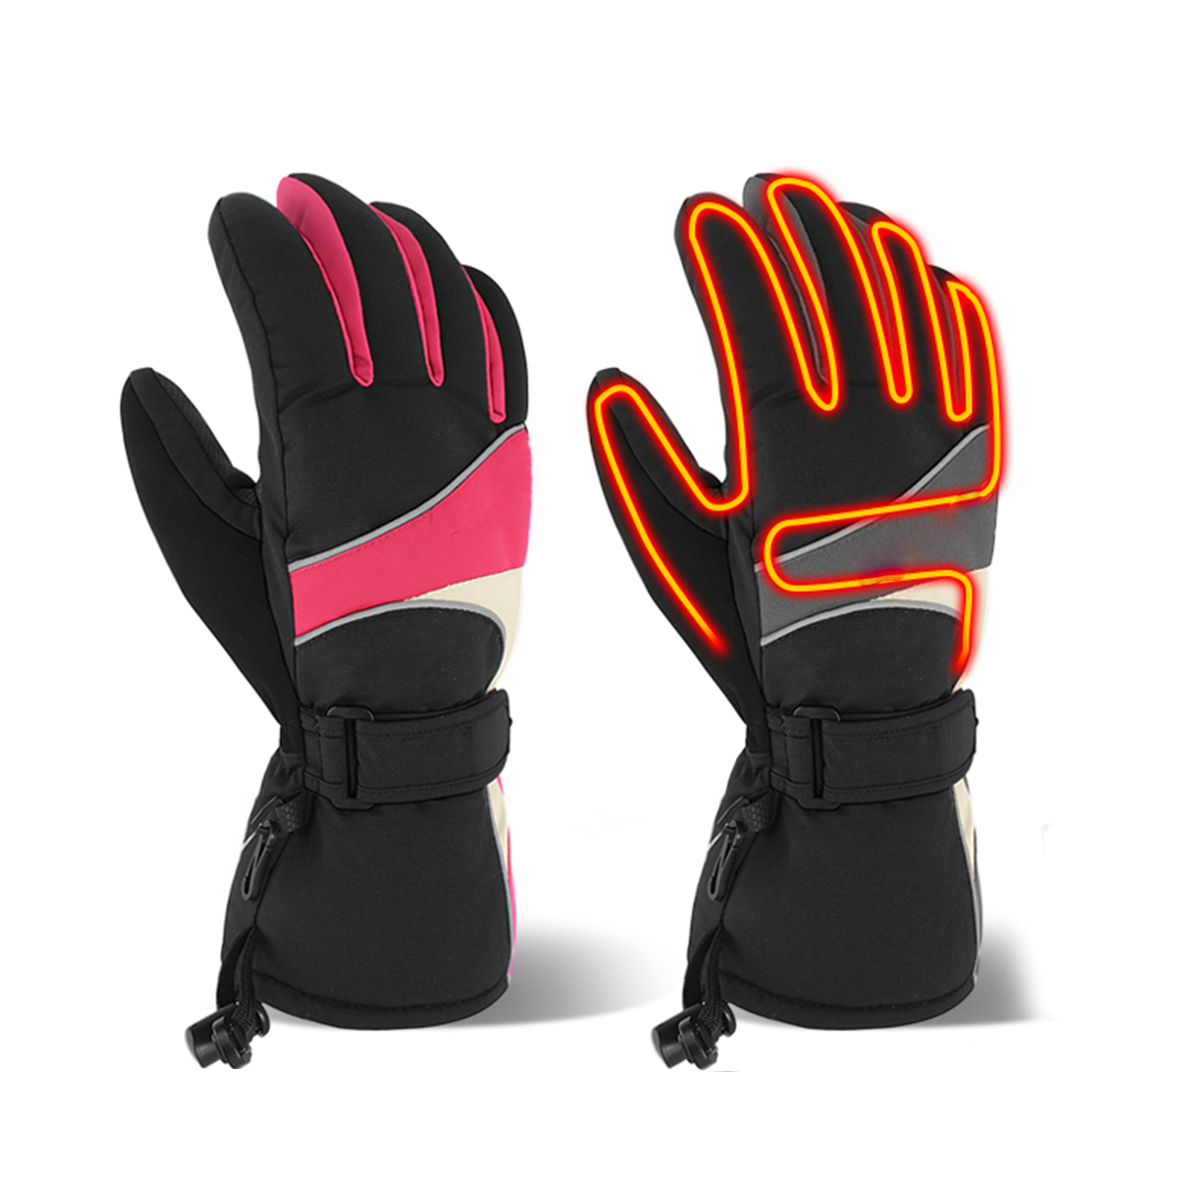 Electric Heated Gloves Motorcycle Winter Waterproof Thermal Outdoor Skiing Warmer